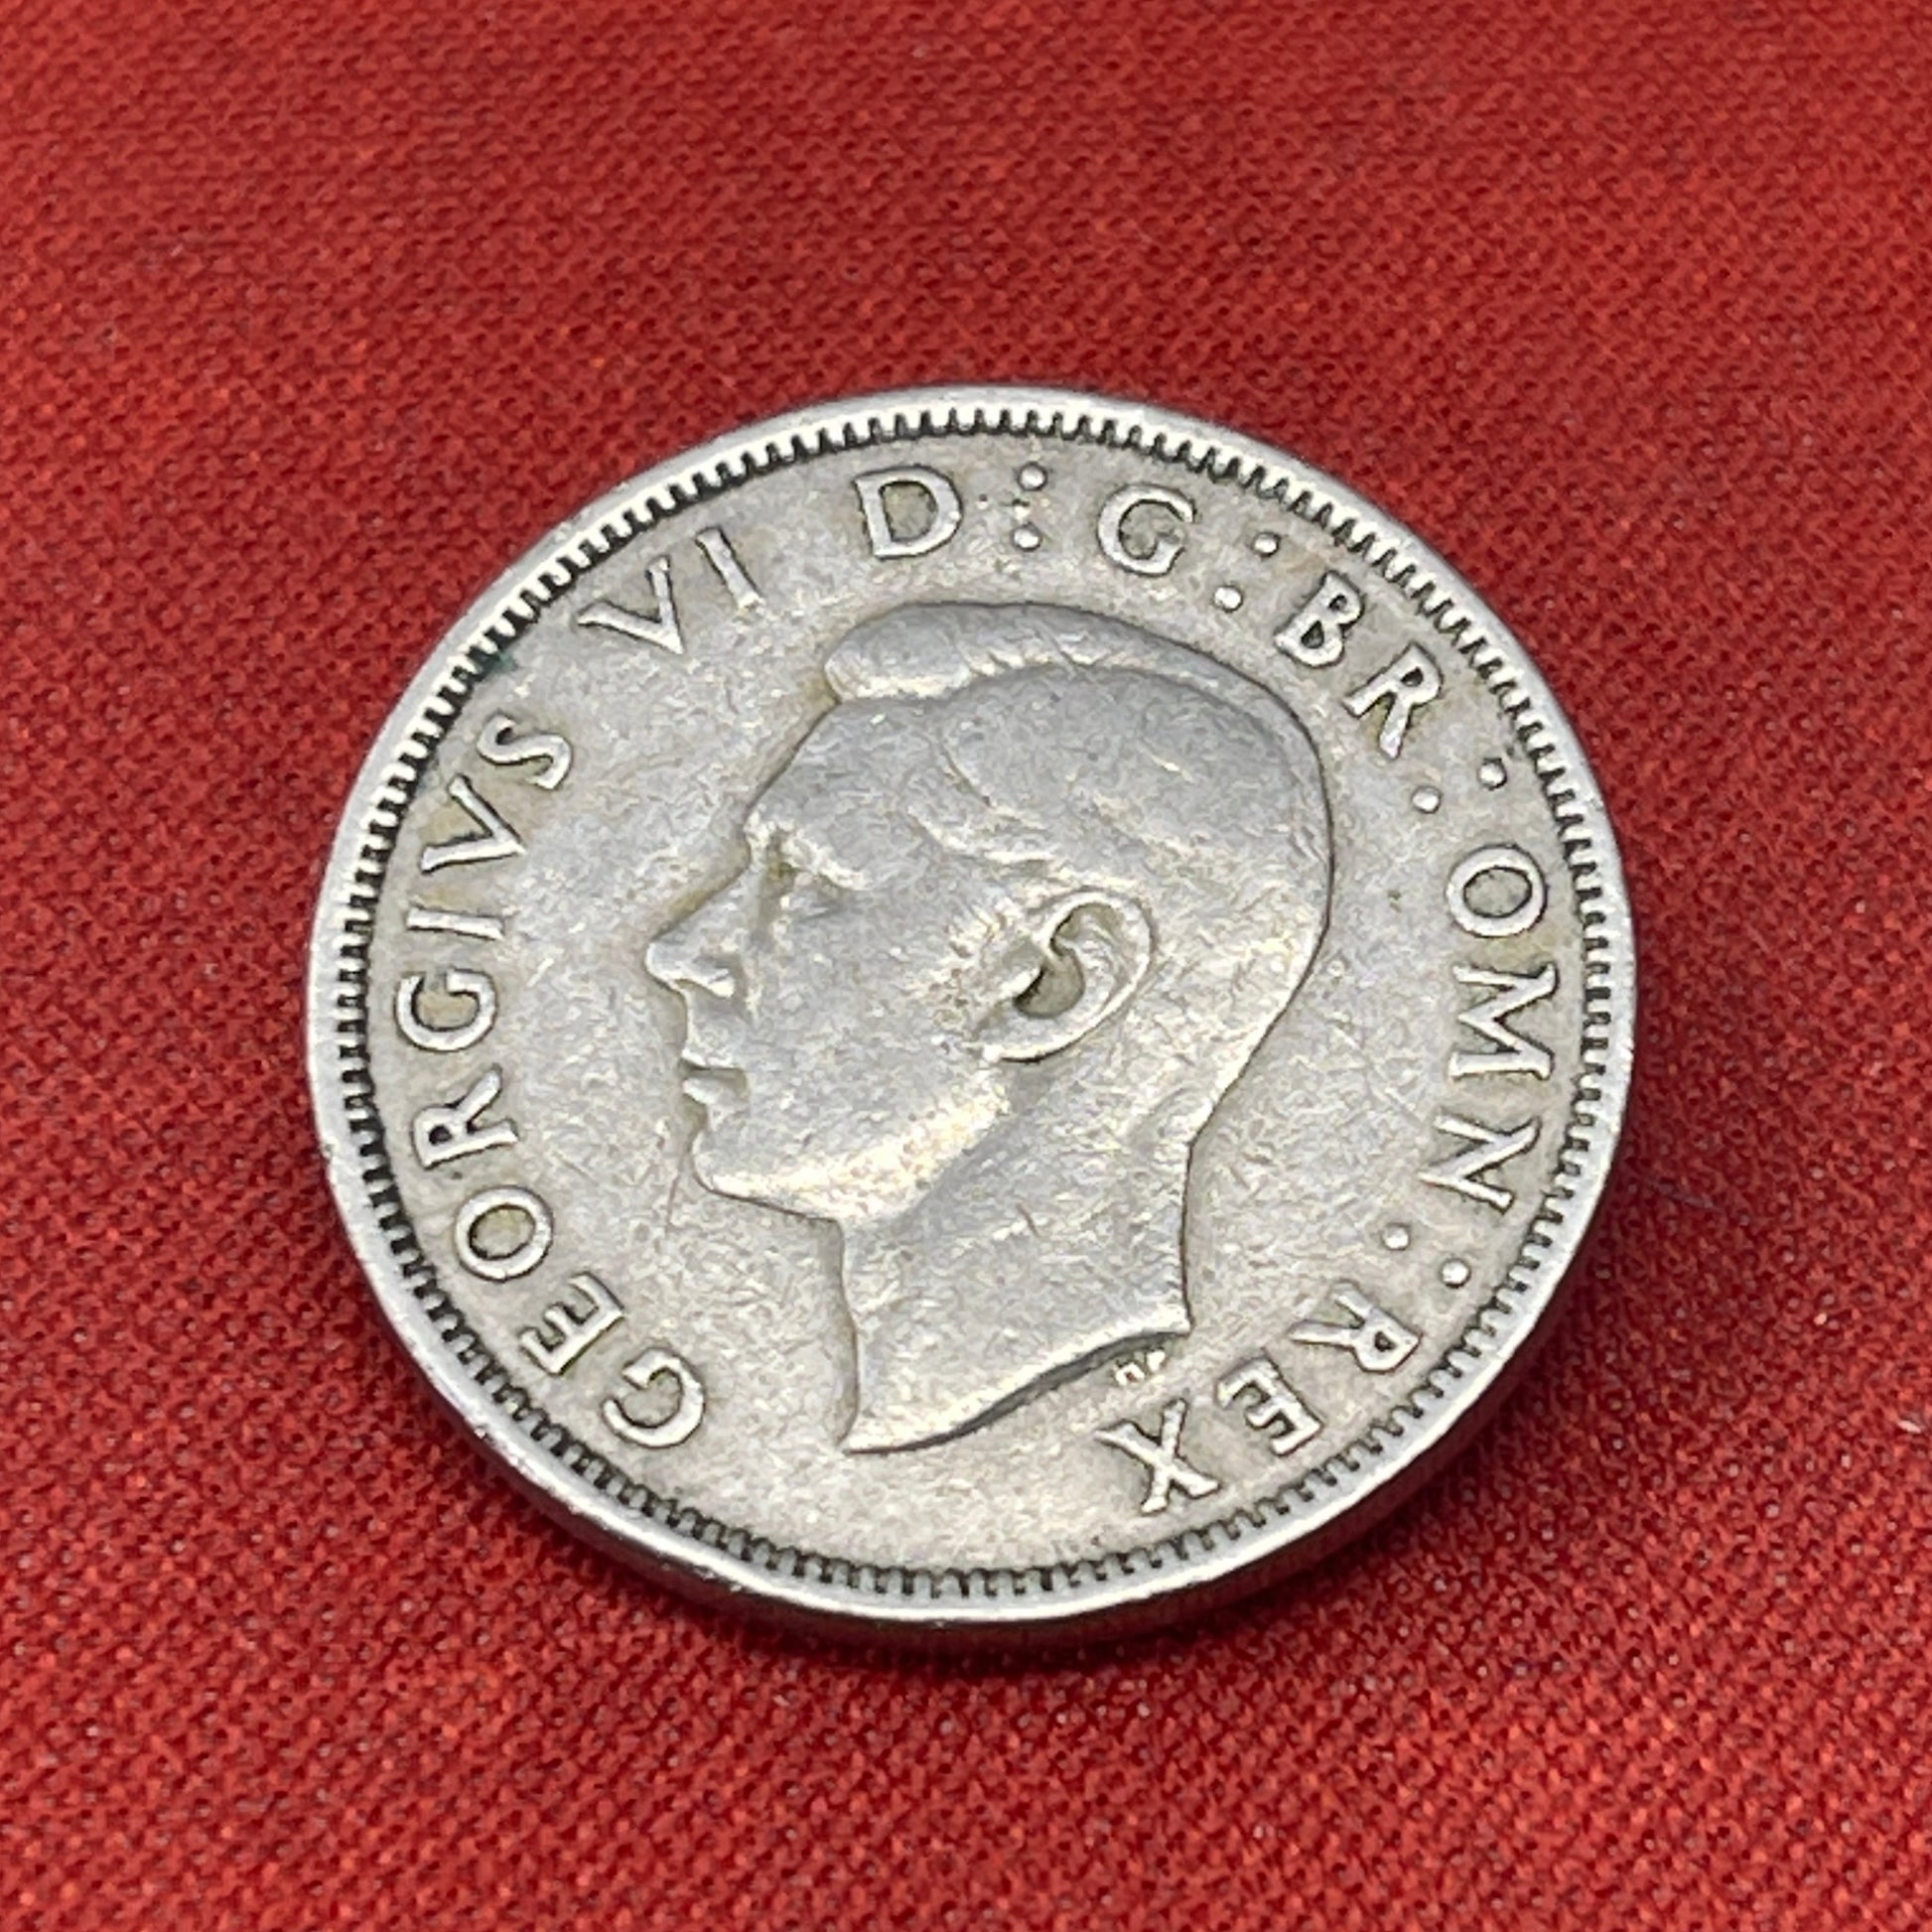  1950 George VI British 2 Shillings Florin 